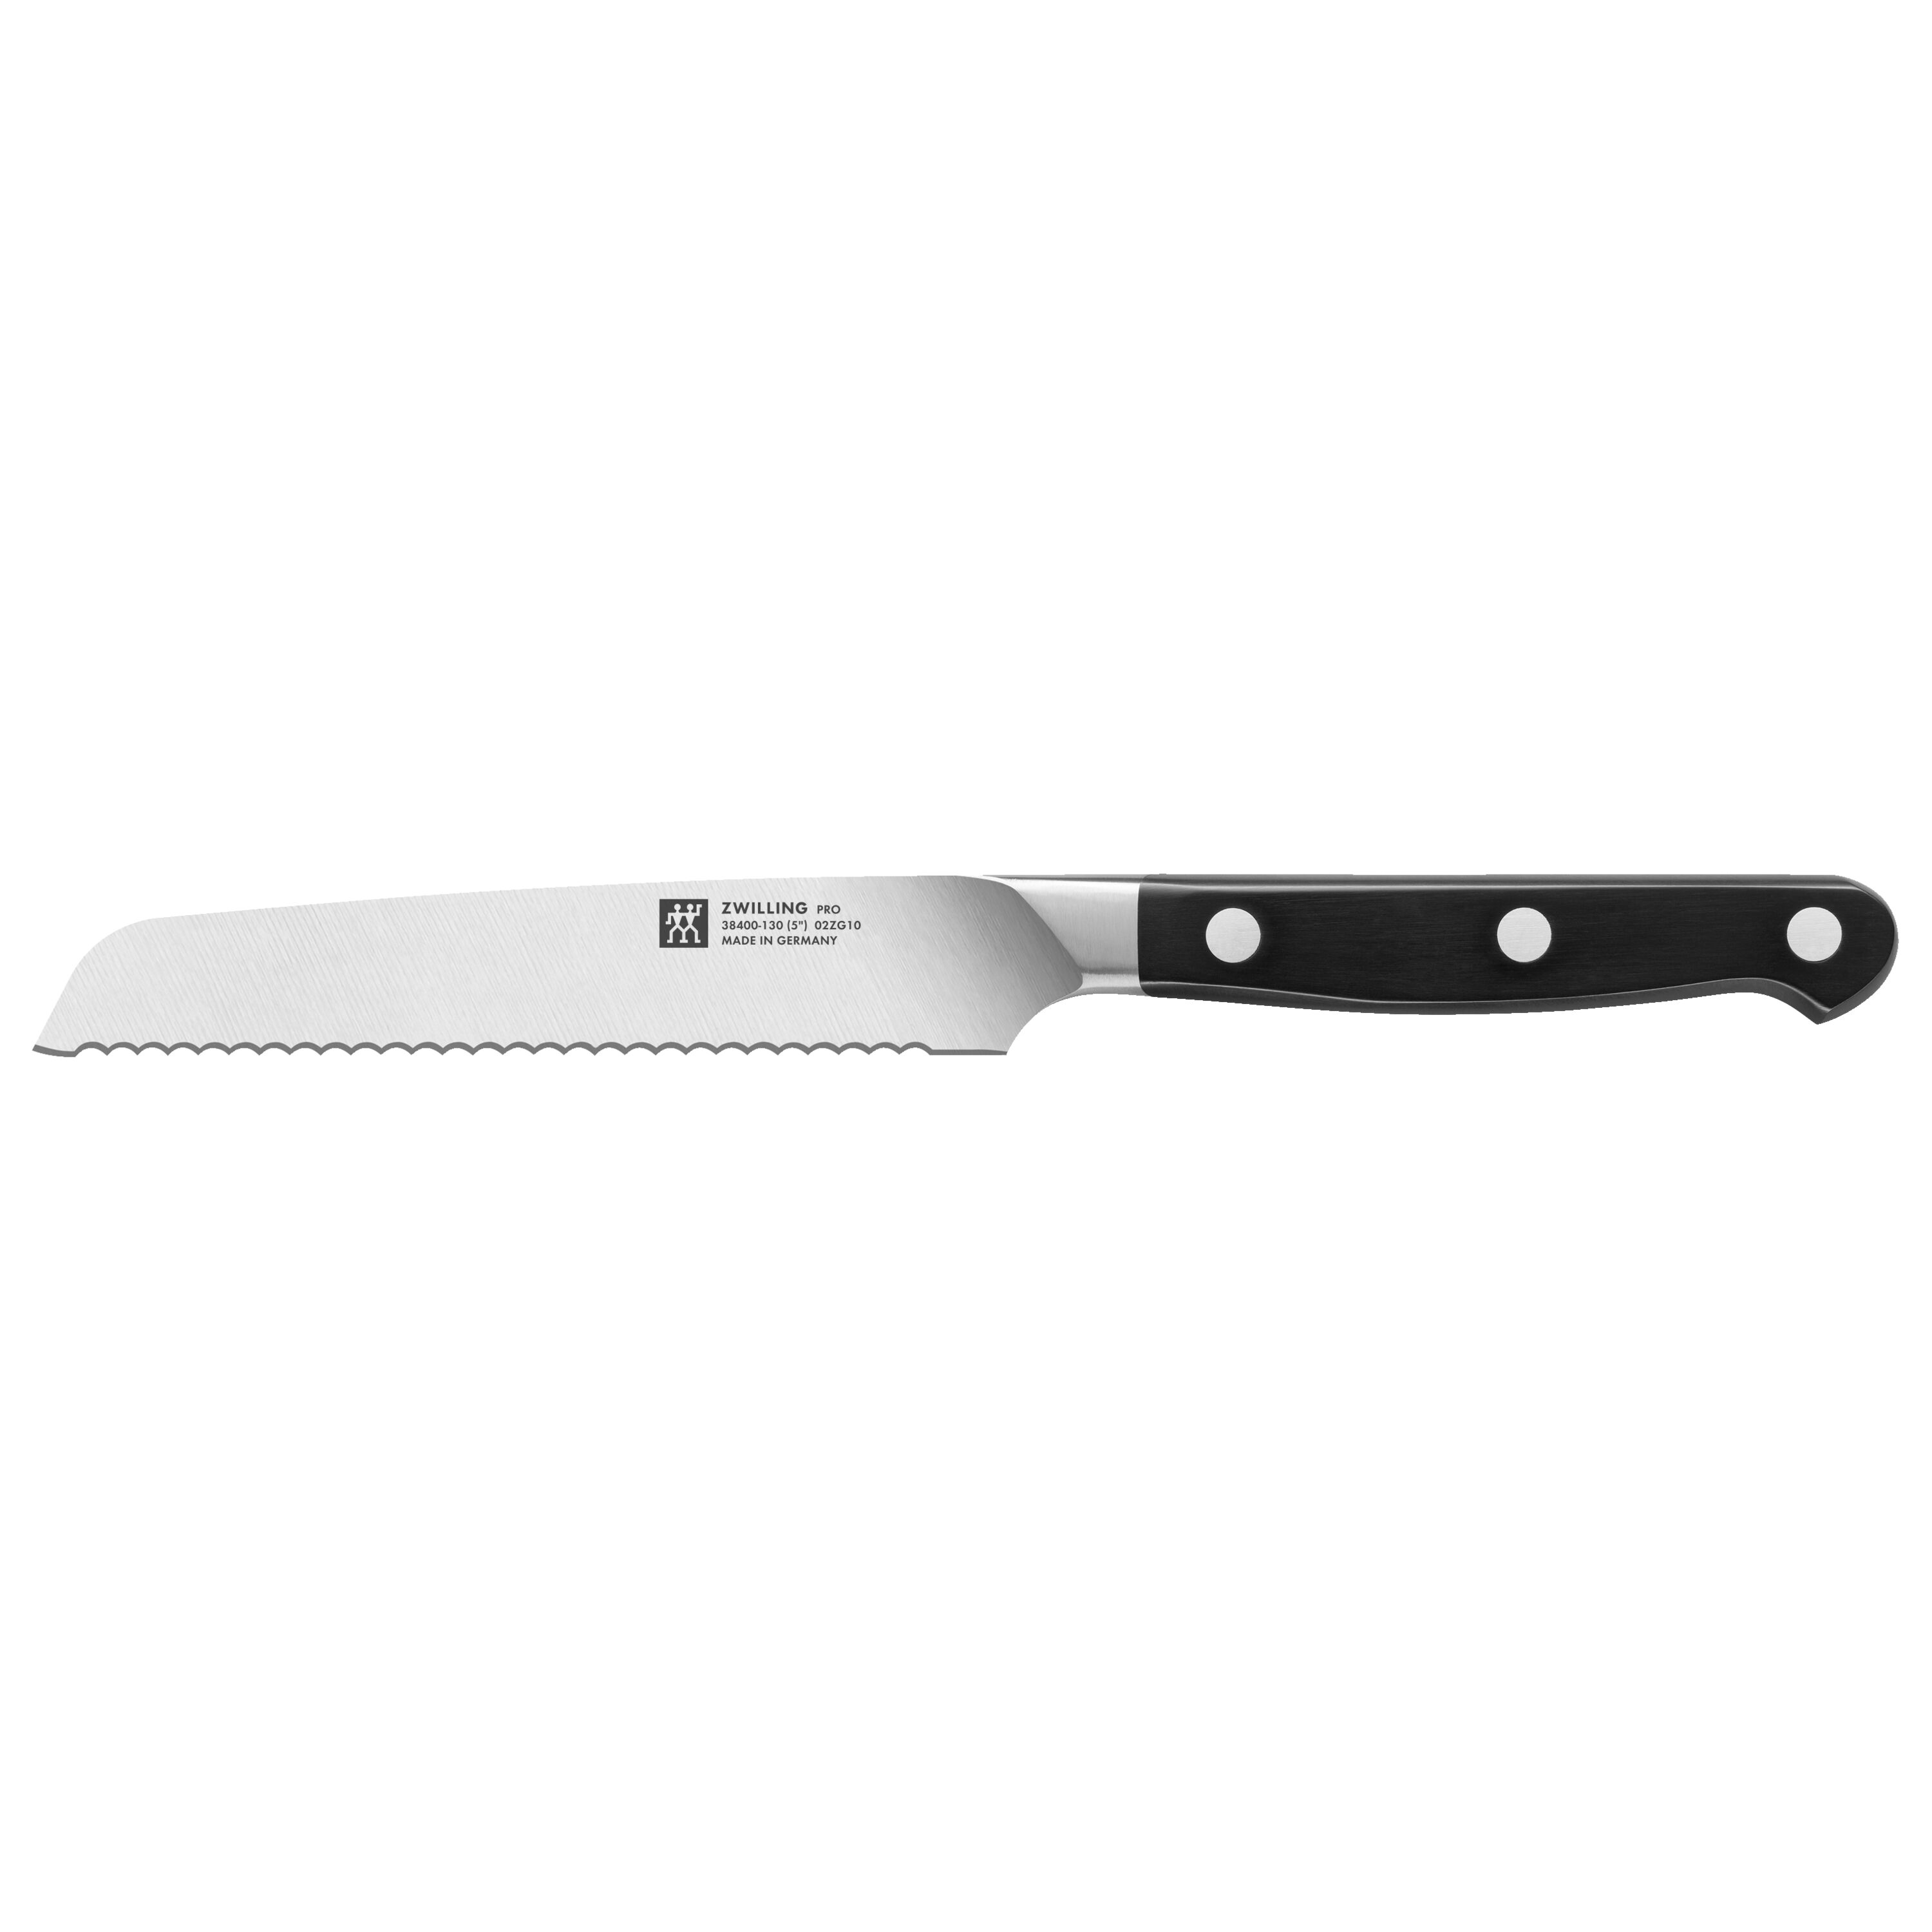 ZWILLING Pro 5-inch Utility knife, serrated edge